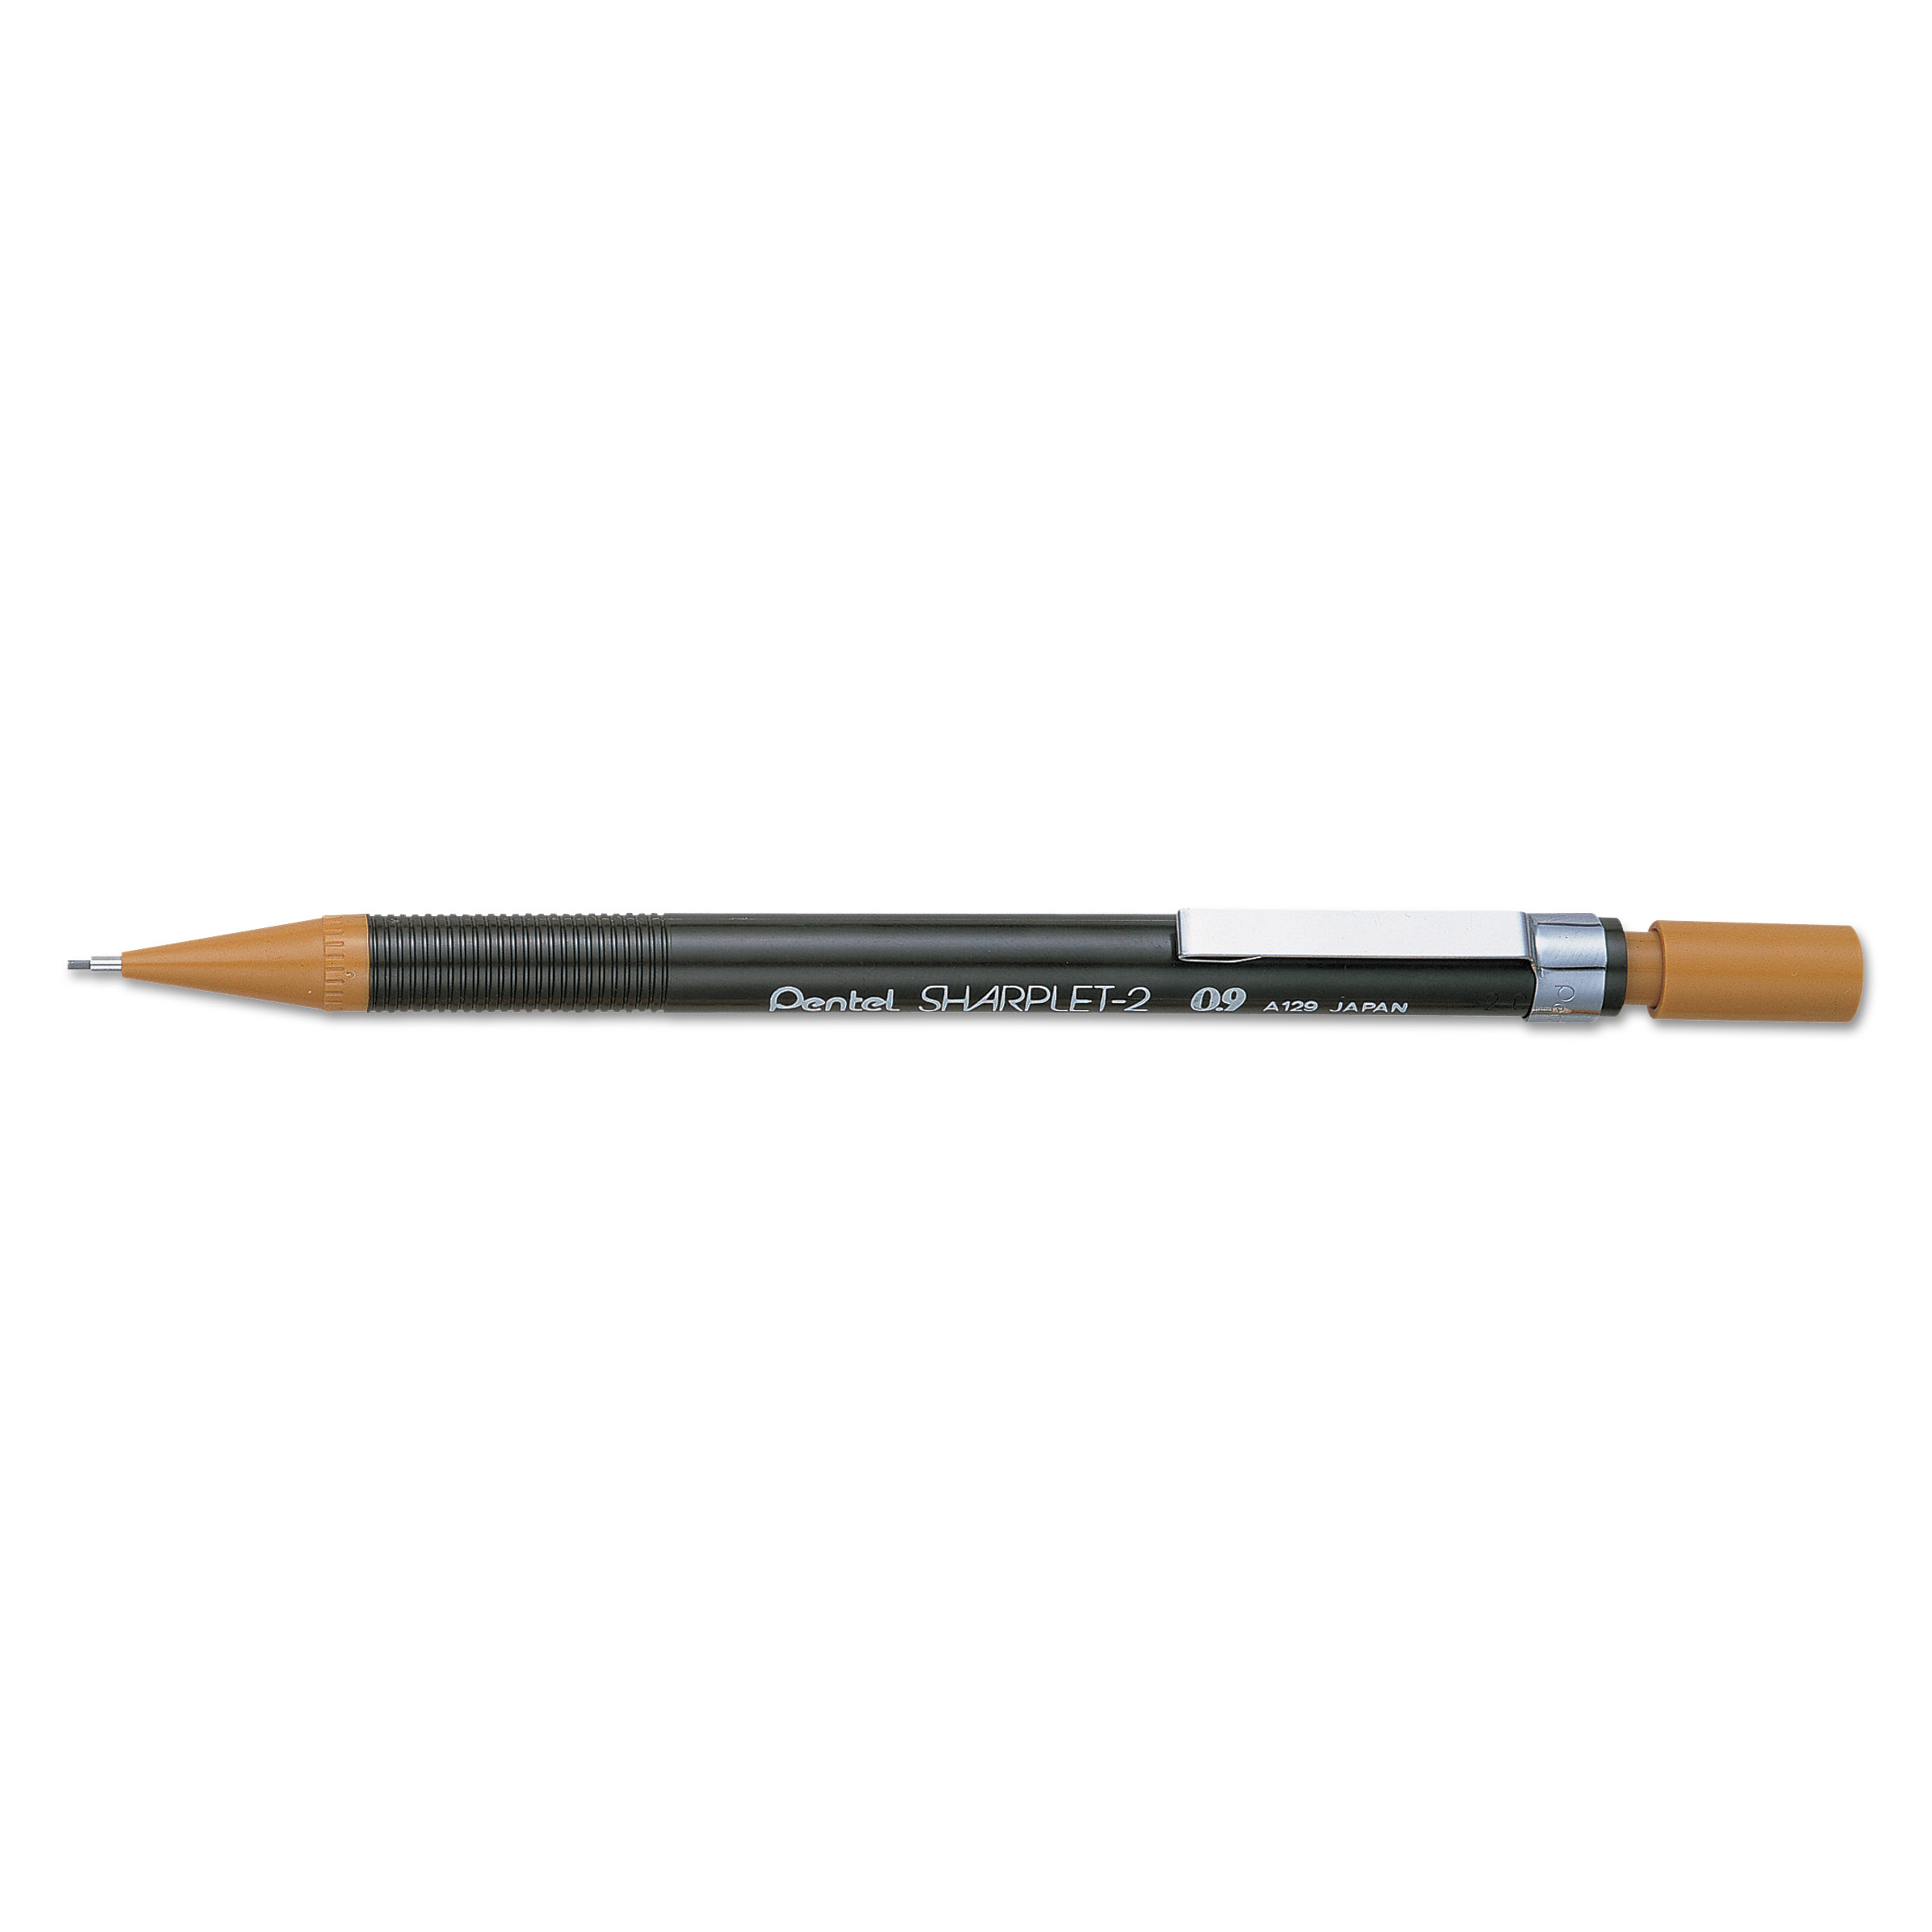  Pentel A129E Sharplet-2 Mechanical Pencil, 0.9 mm, HB (#2.5), Black Lead, Brown Barrel (PENA129E) 